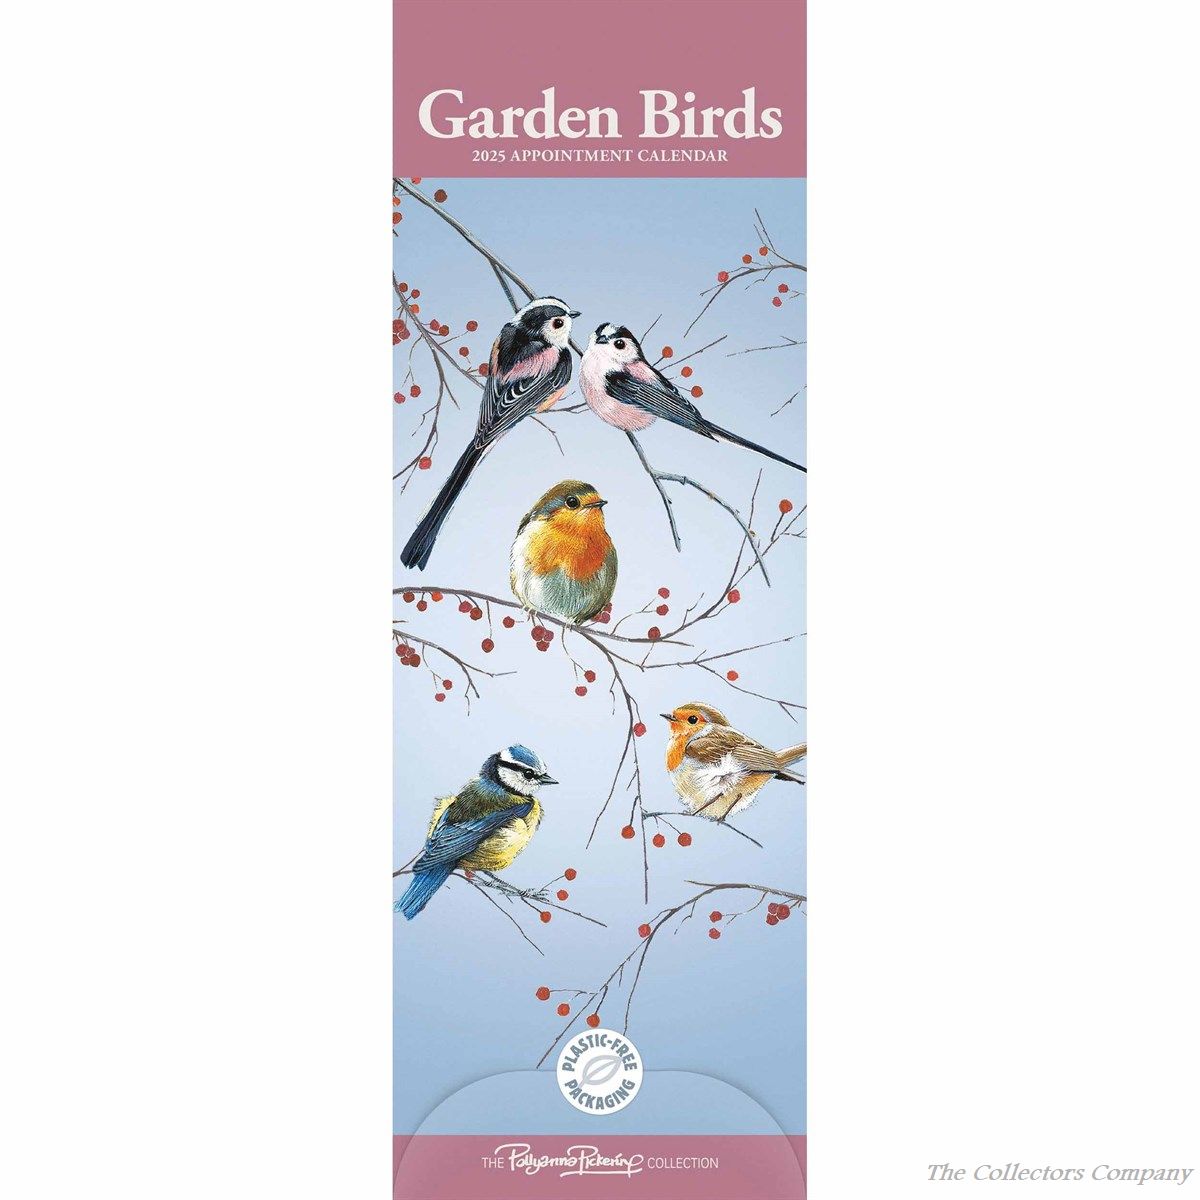 Garden Birds by Pollyanna Pickering Slim Calendar 2025